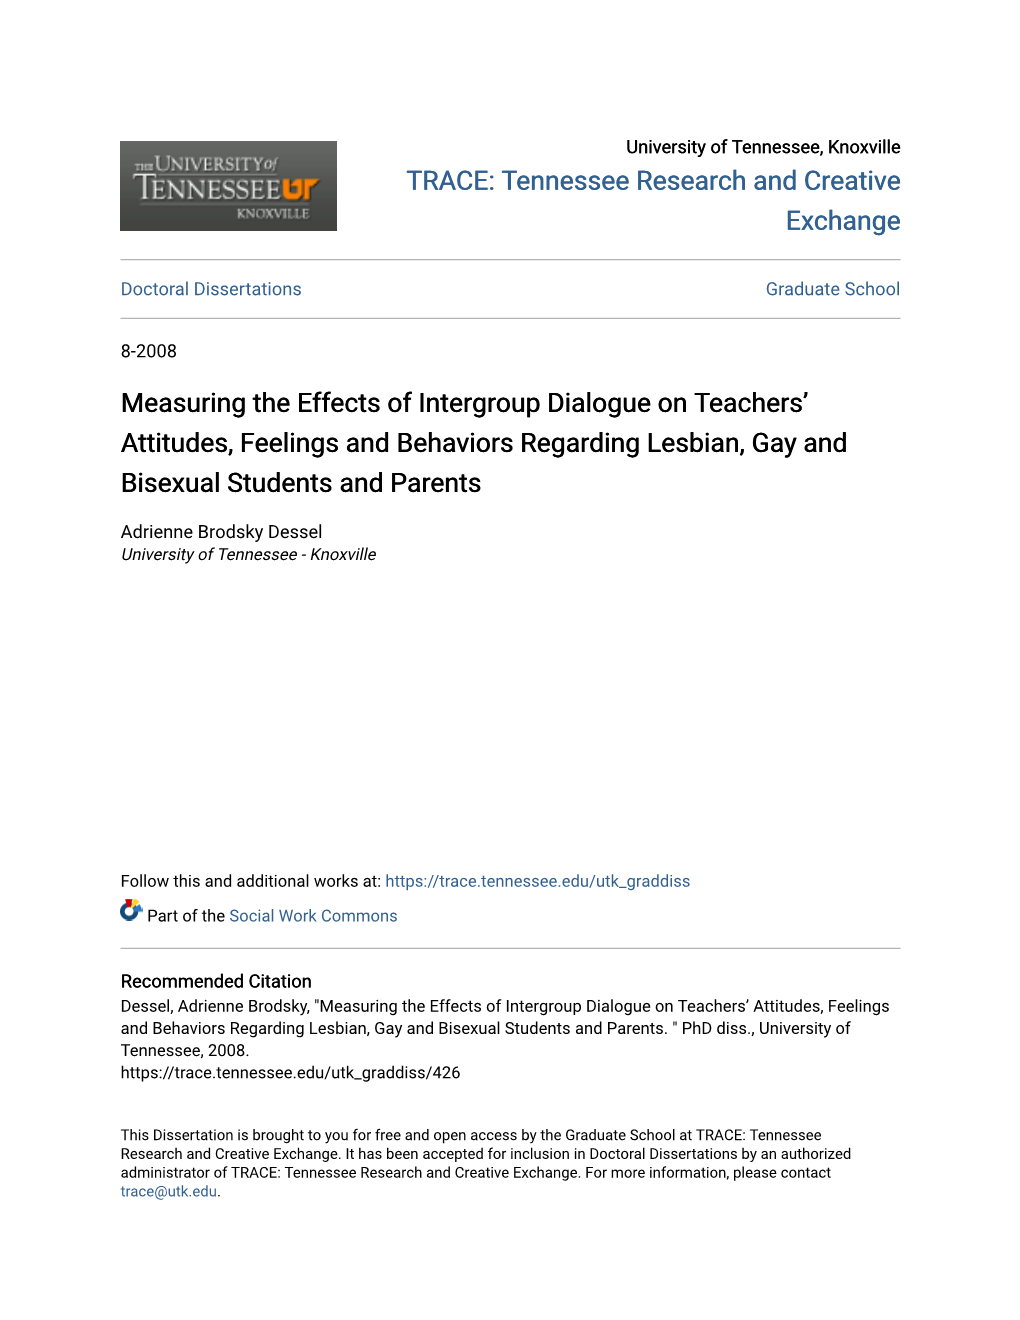 Measuring the Effects of Intergroup Dialogue on Teachersâ•Ž Attitudes